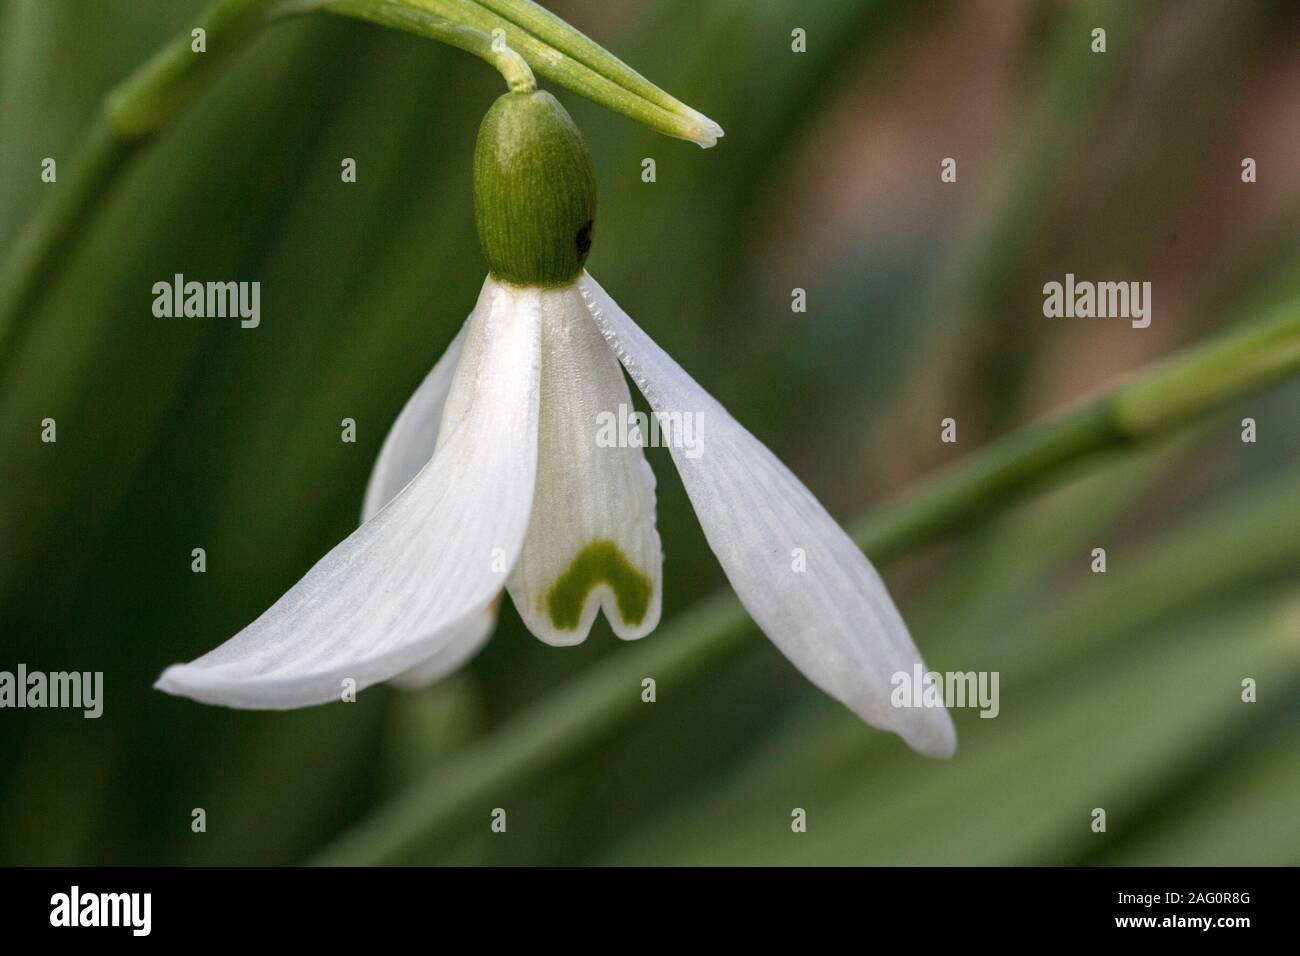 Detailed Image of a Single Snowdrop Flower (Galanthus nivalis) in February Sunshine, Great Torrington, Devon, England. Stock Photo